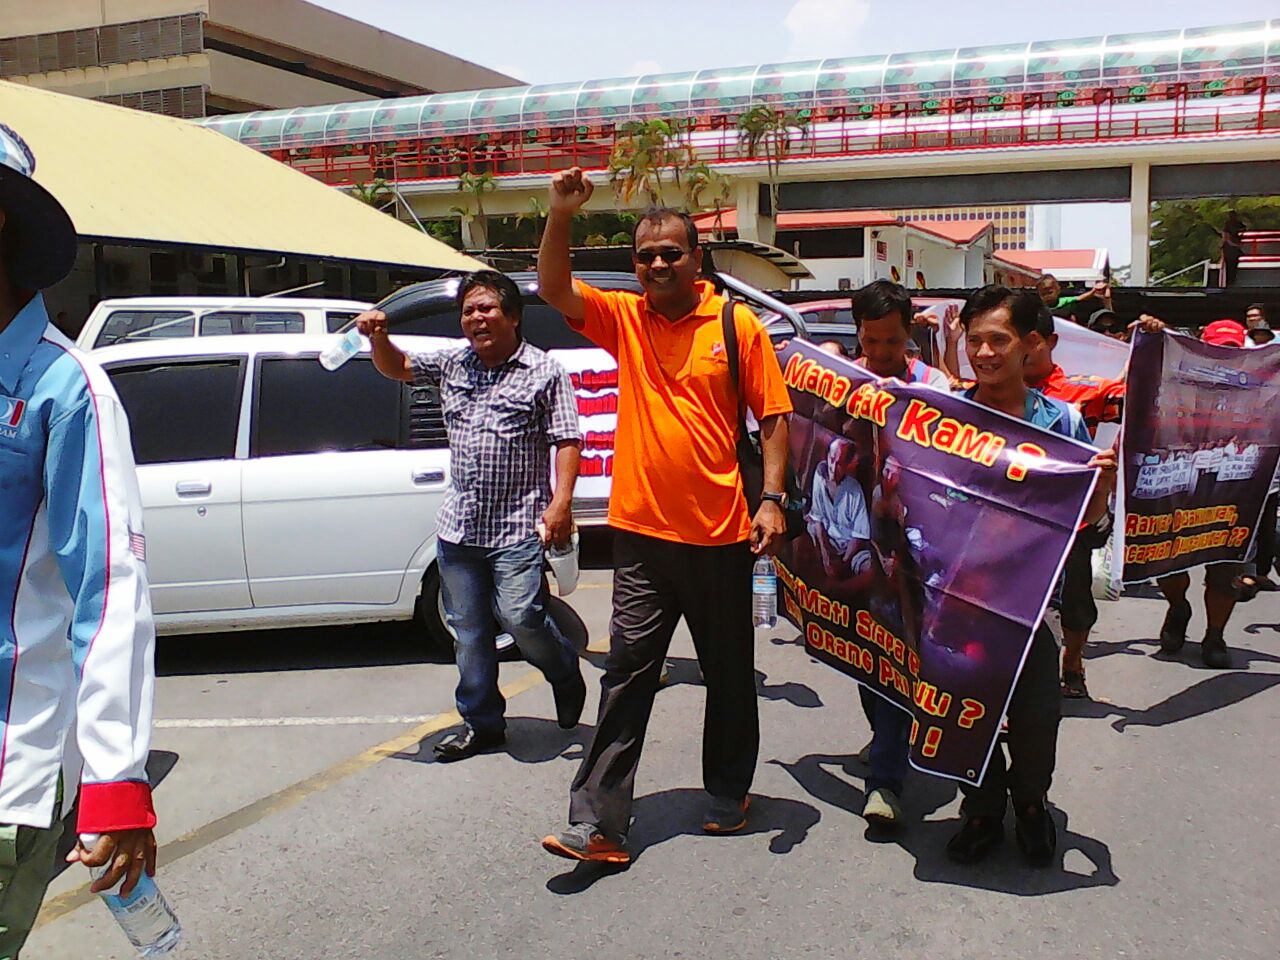 S. Manikavasagam (orange shirt) leading the group walking through the police station compound shouting "We want IC"